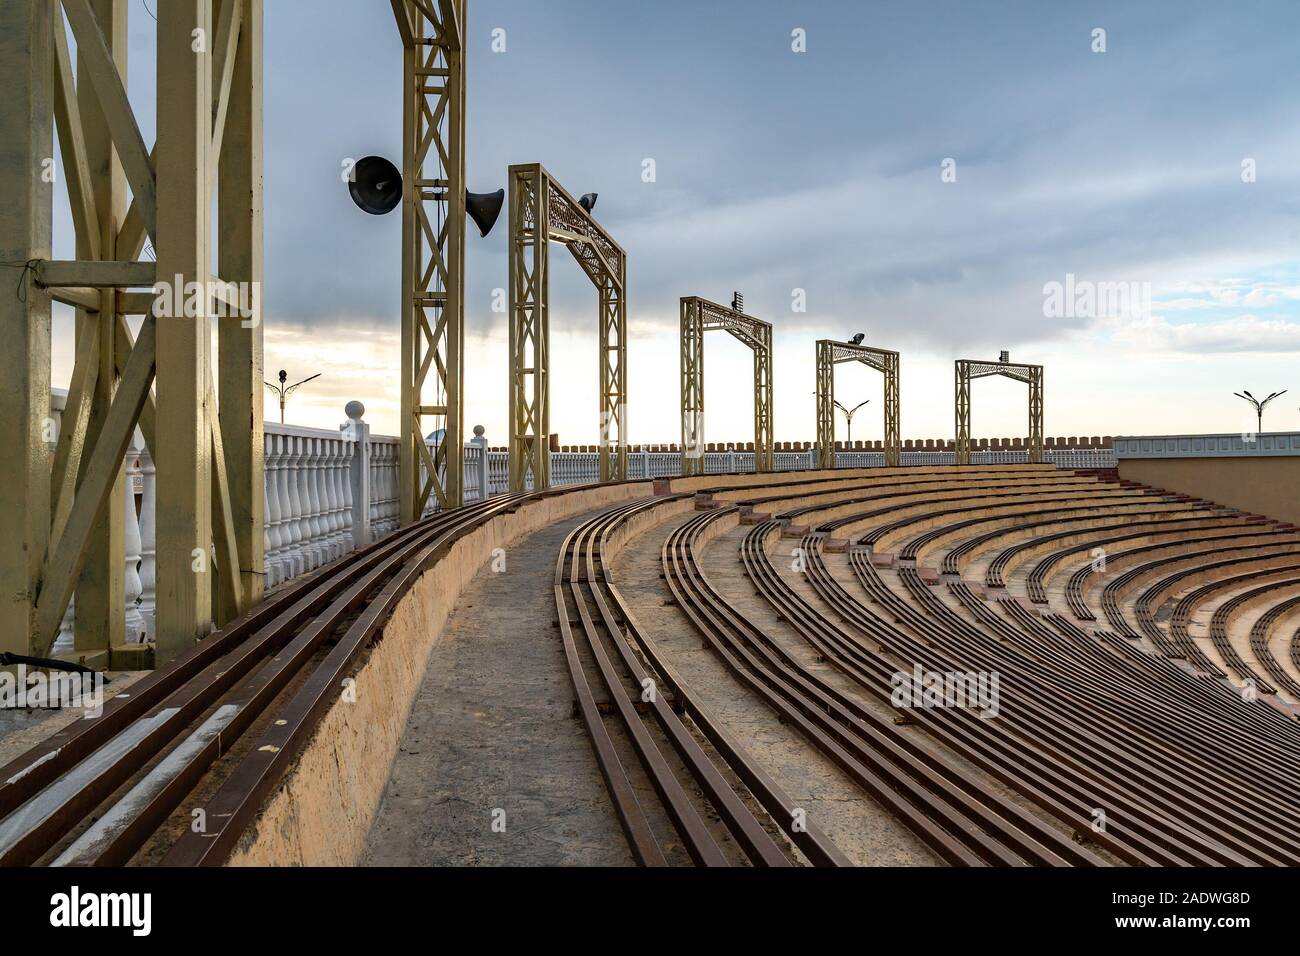 Istaravshan Kalai Mug Teppe Fortress View of Empty Amphitheater on a Cloudy Rainy Day Stock Photo